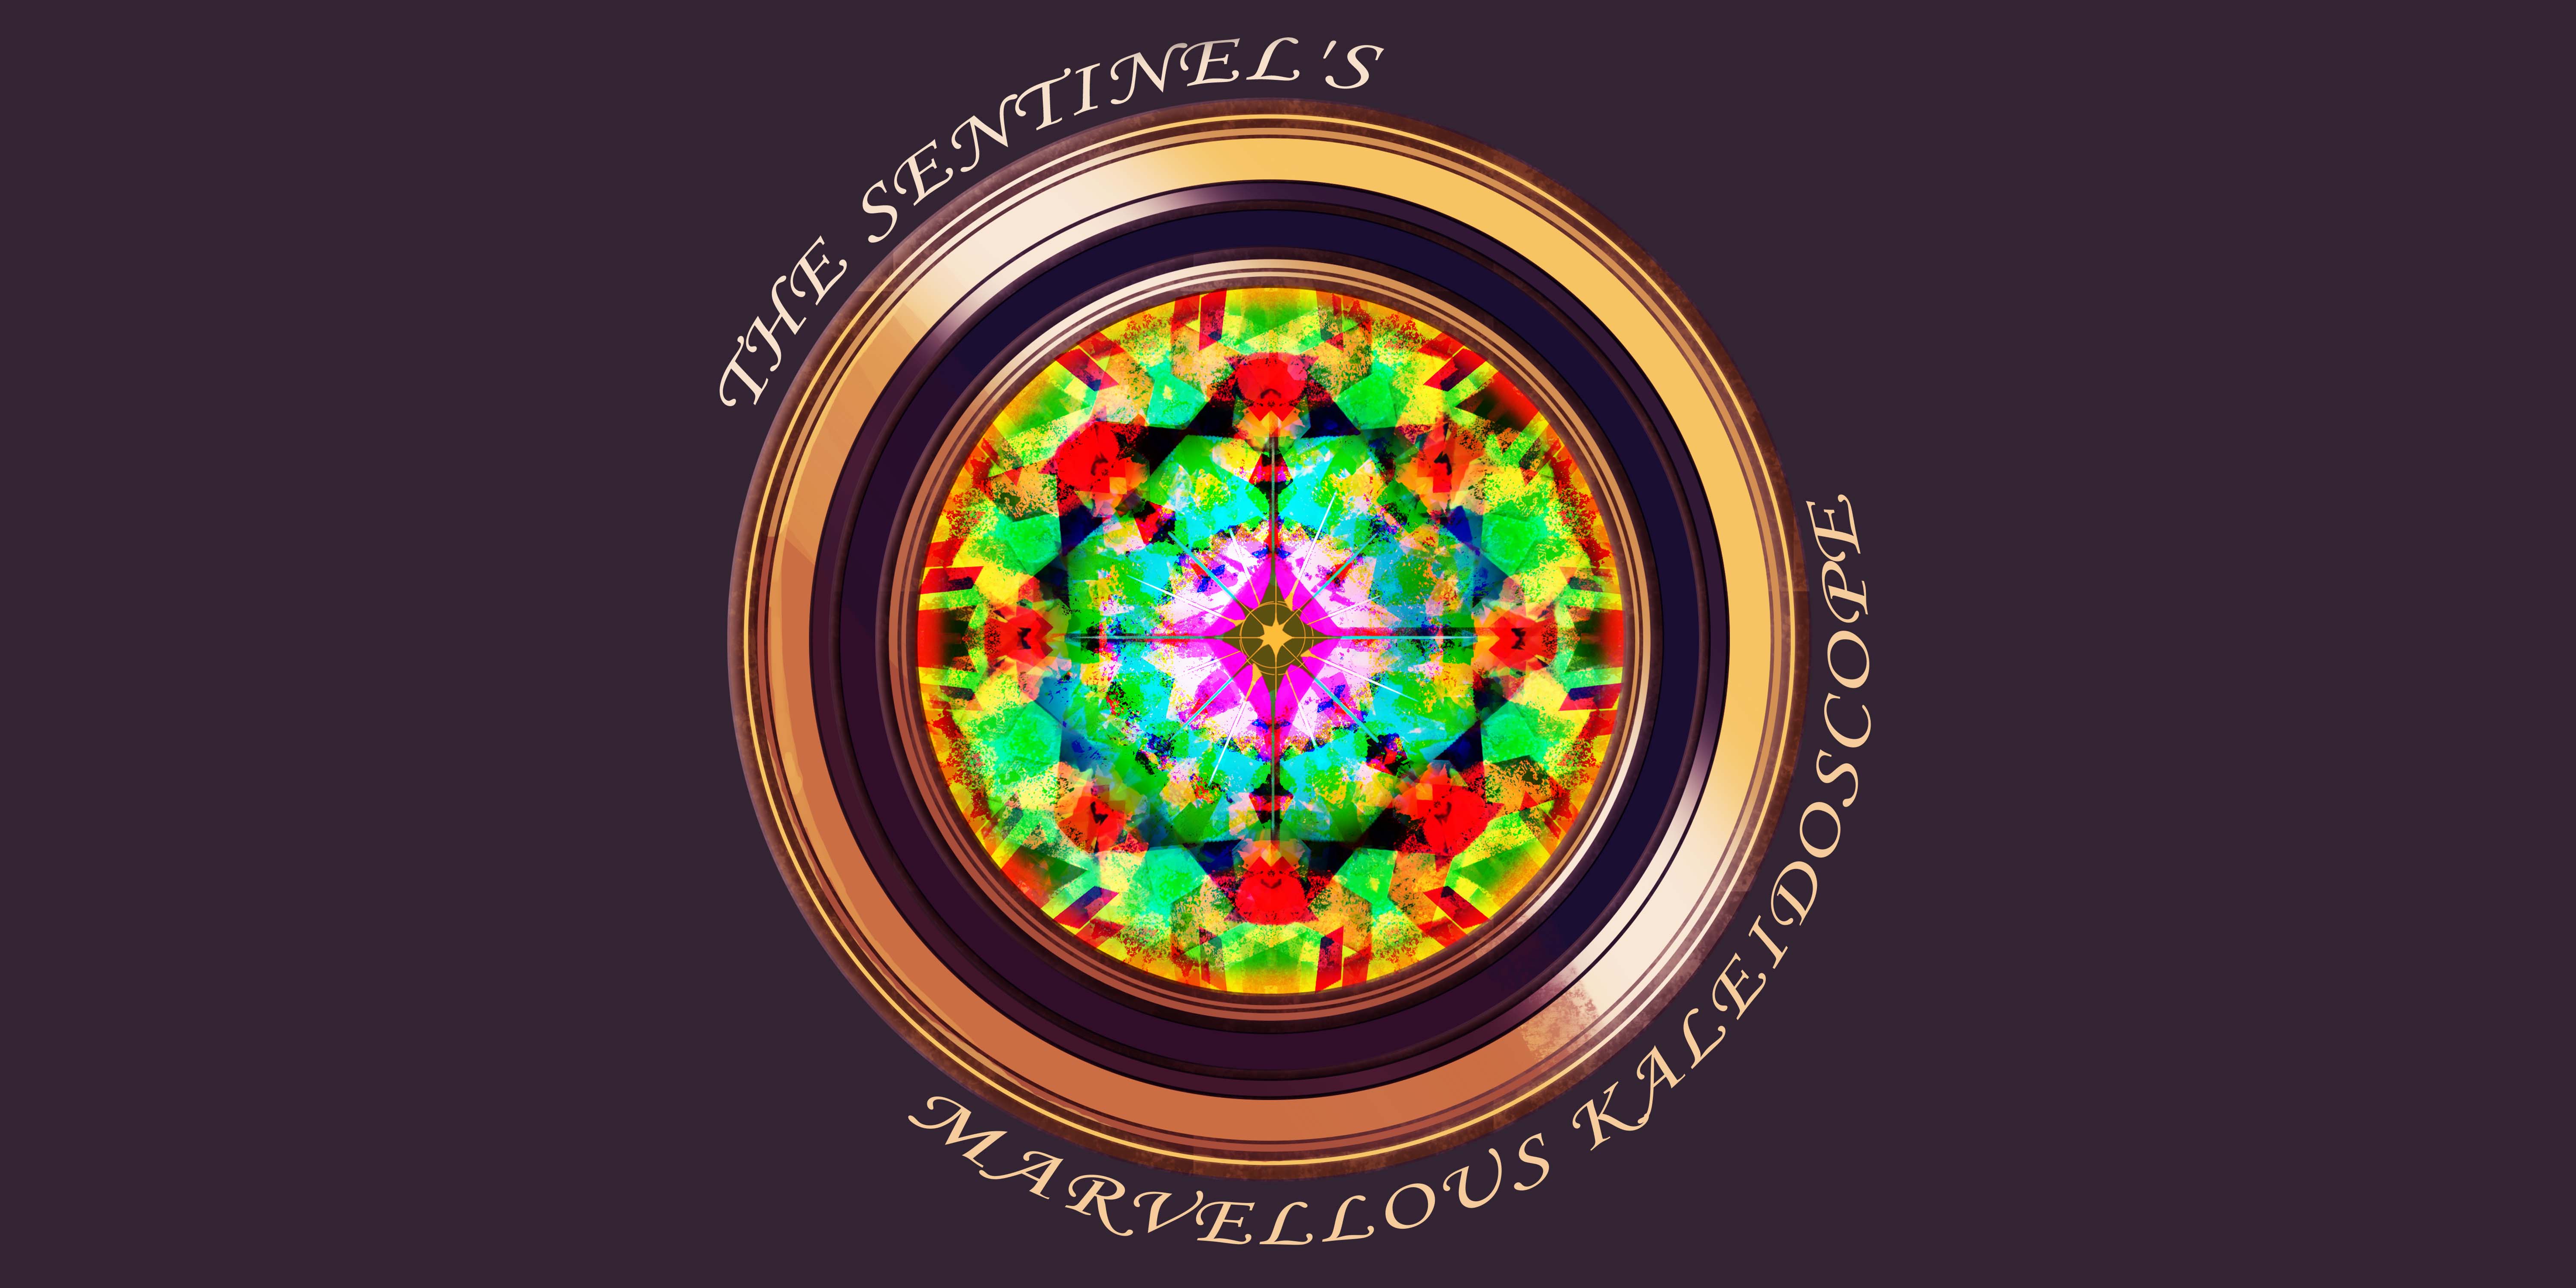 The Sentinel’s Marvellous Kaleidoscope